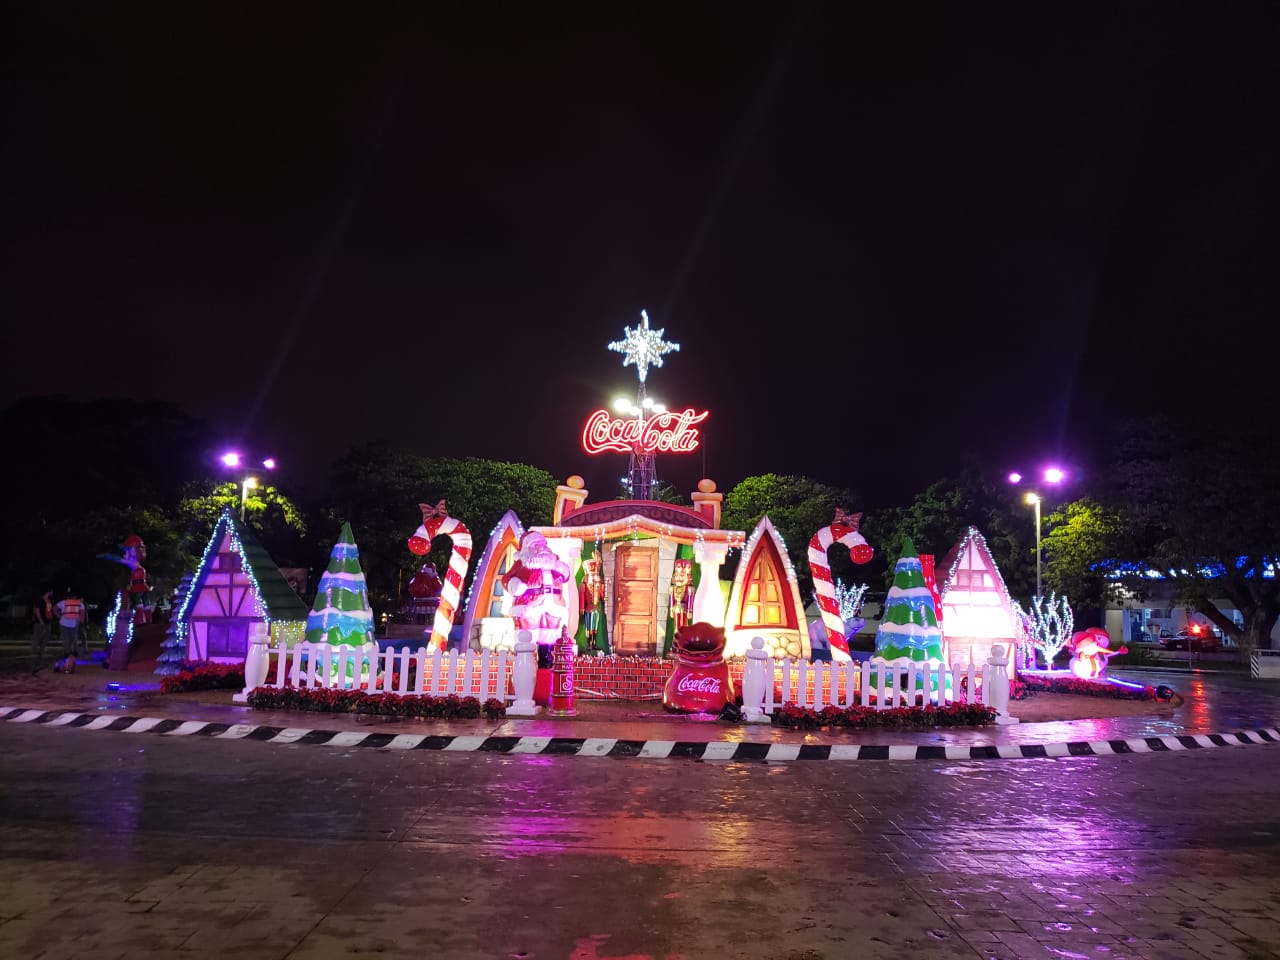 Empresas se unen al decorado navideño en Mérida